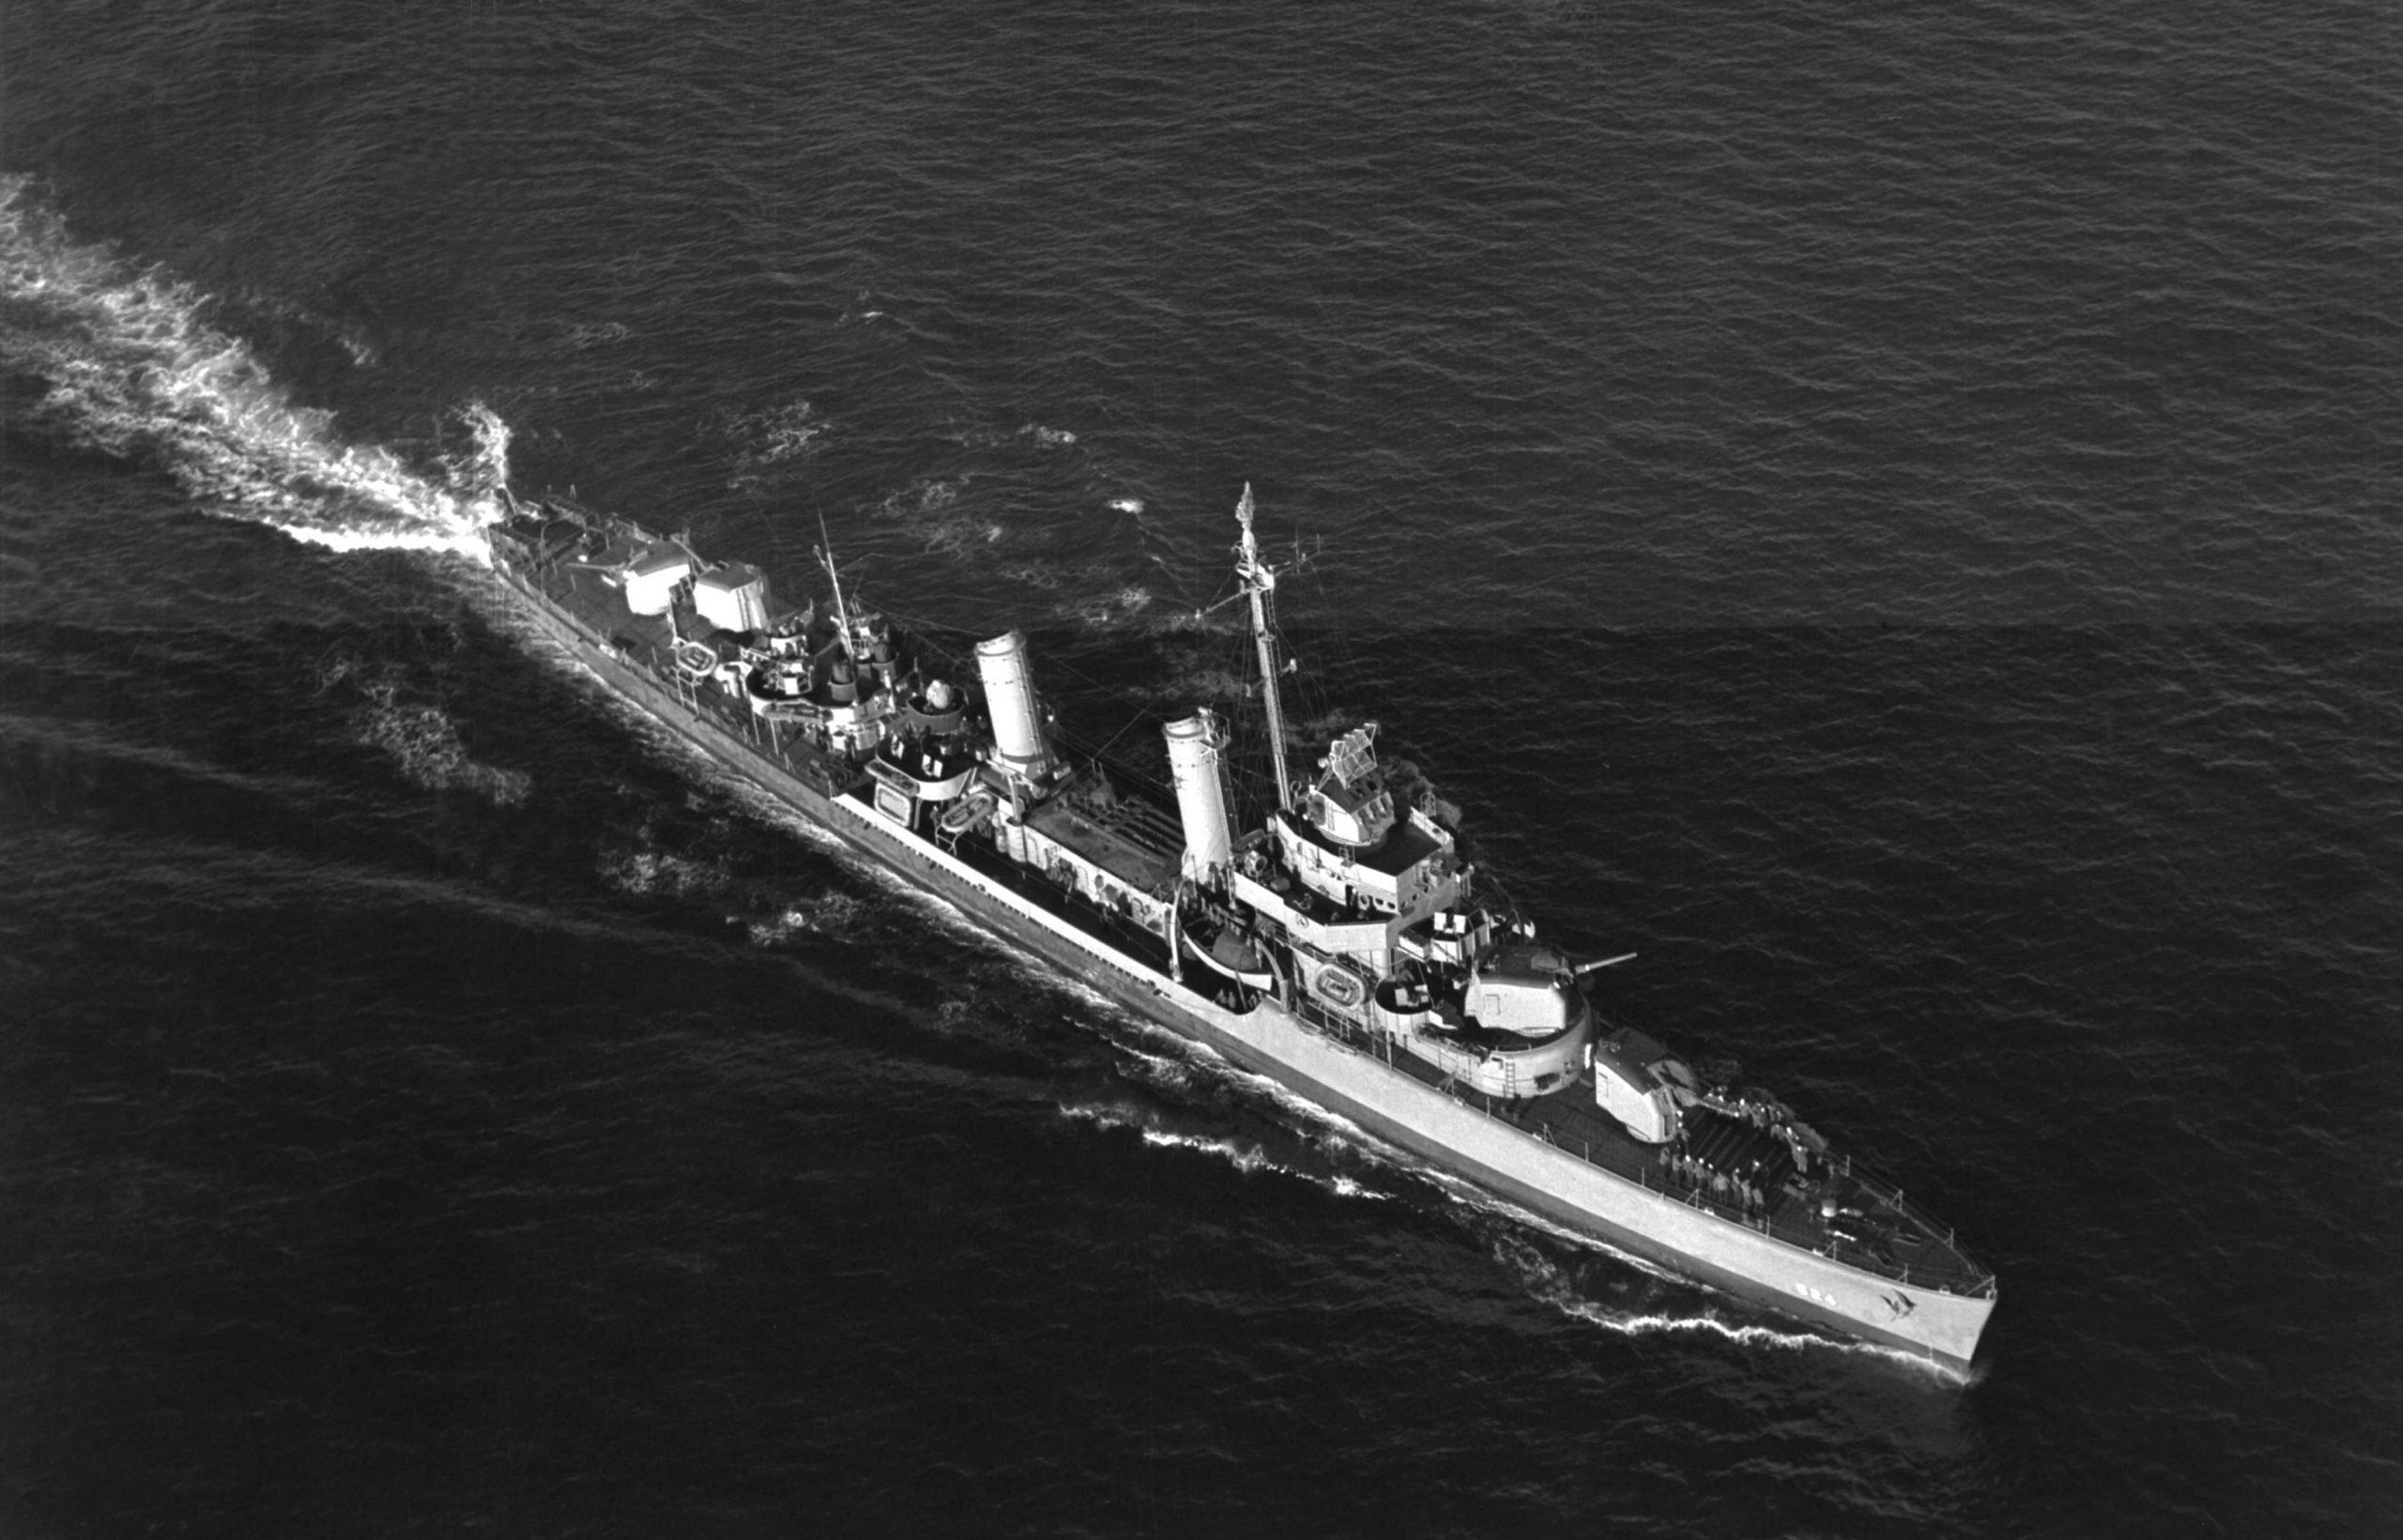 American Baldwin destroyer at sea